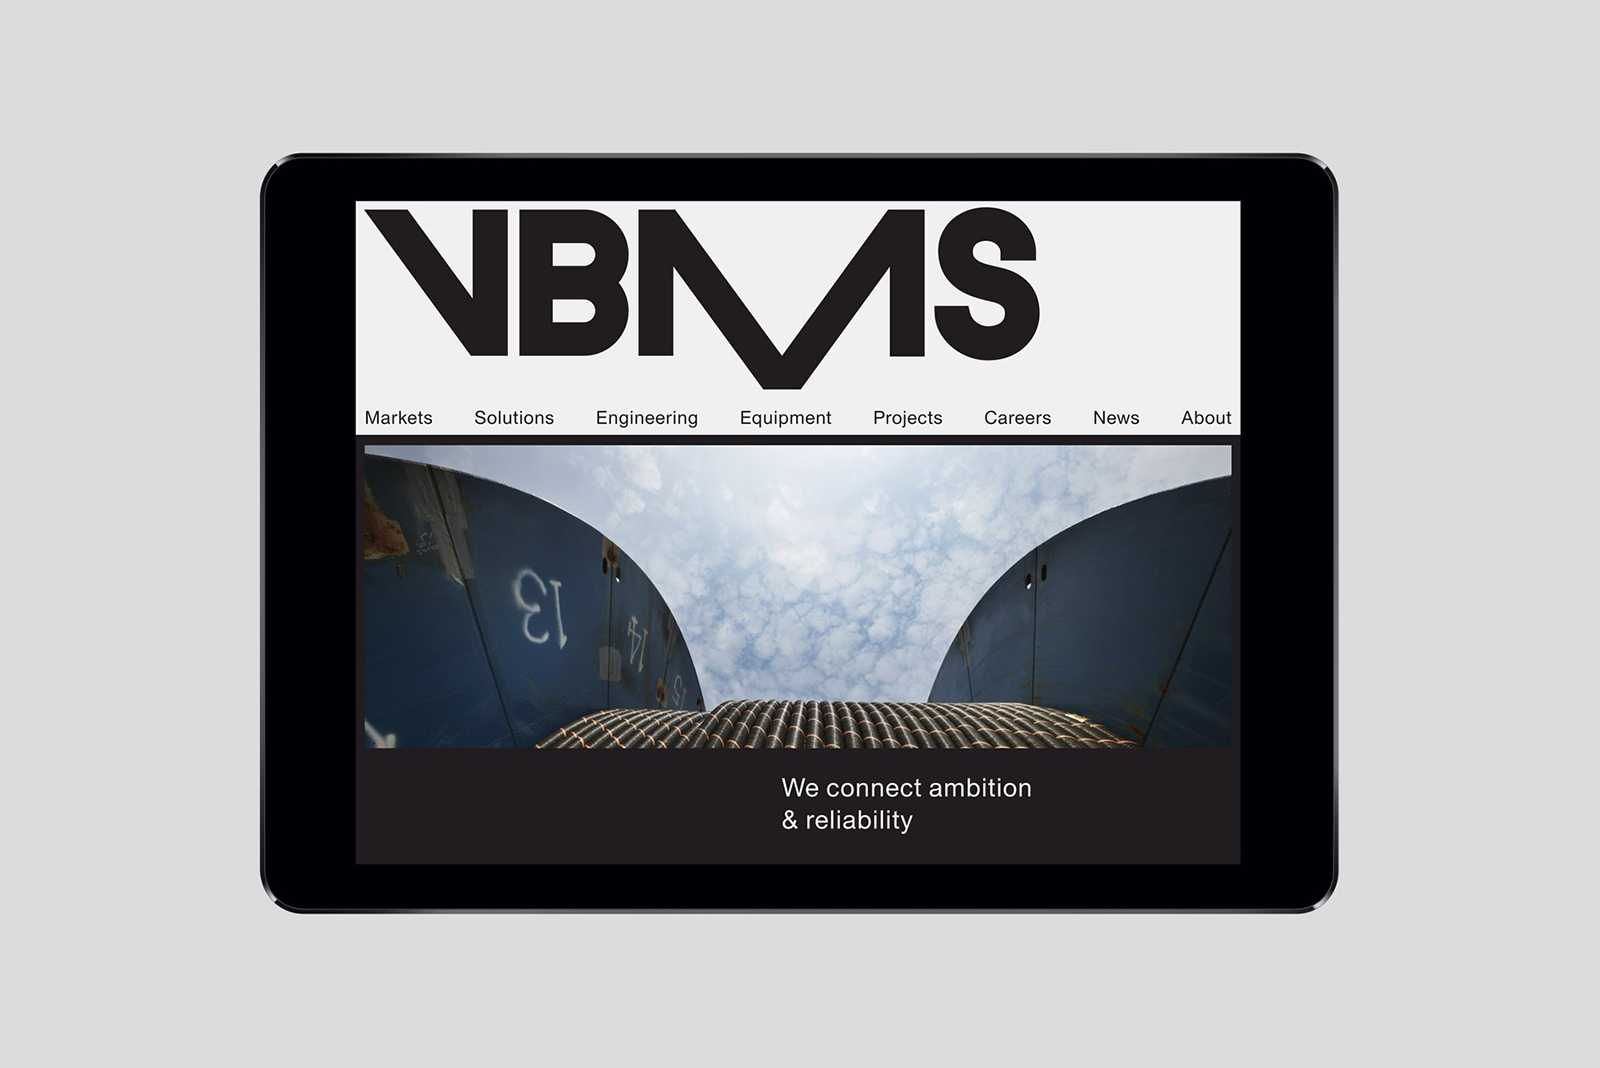 Branding and webesite by Studio Dumbar for VBMS